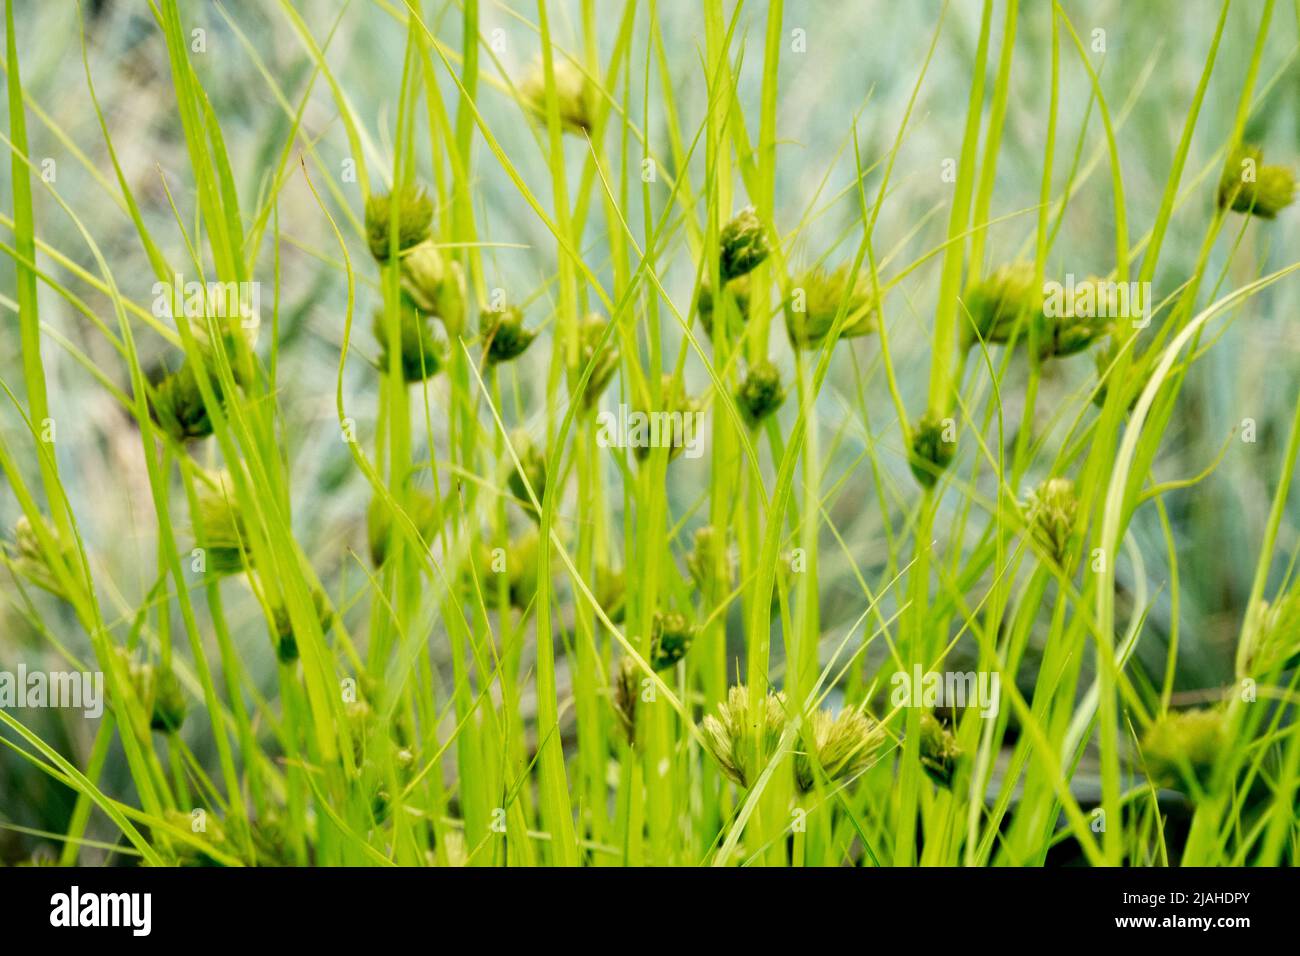 Carex bohemica, Grass, Flower, Ornamental, Grasses, Clumps of, Yellow, Sedge, Carex, Clump Stock Photo